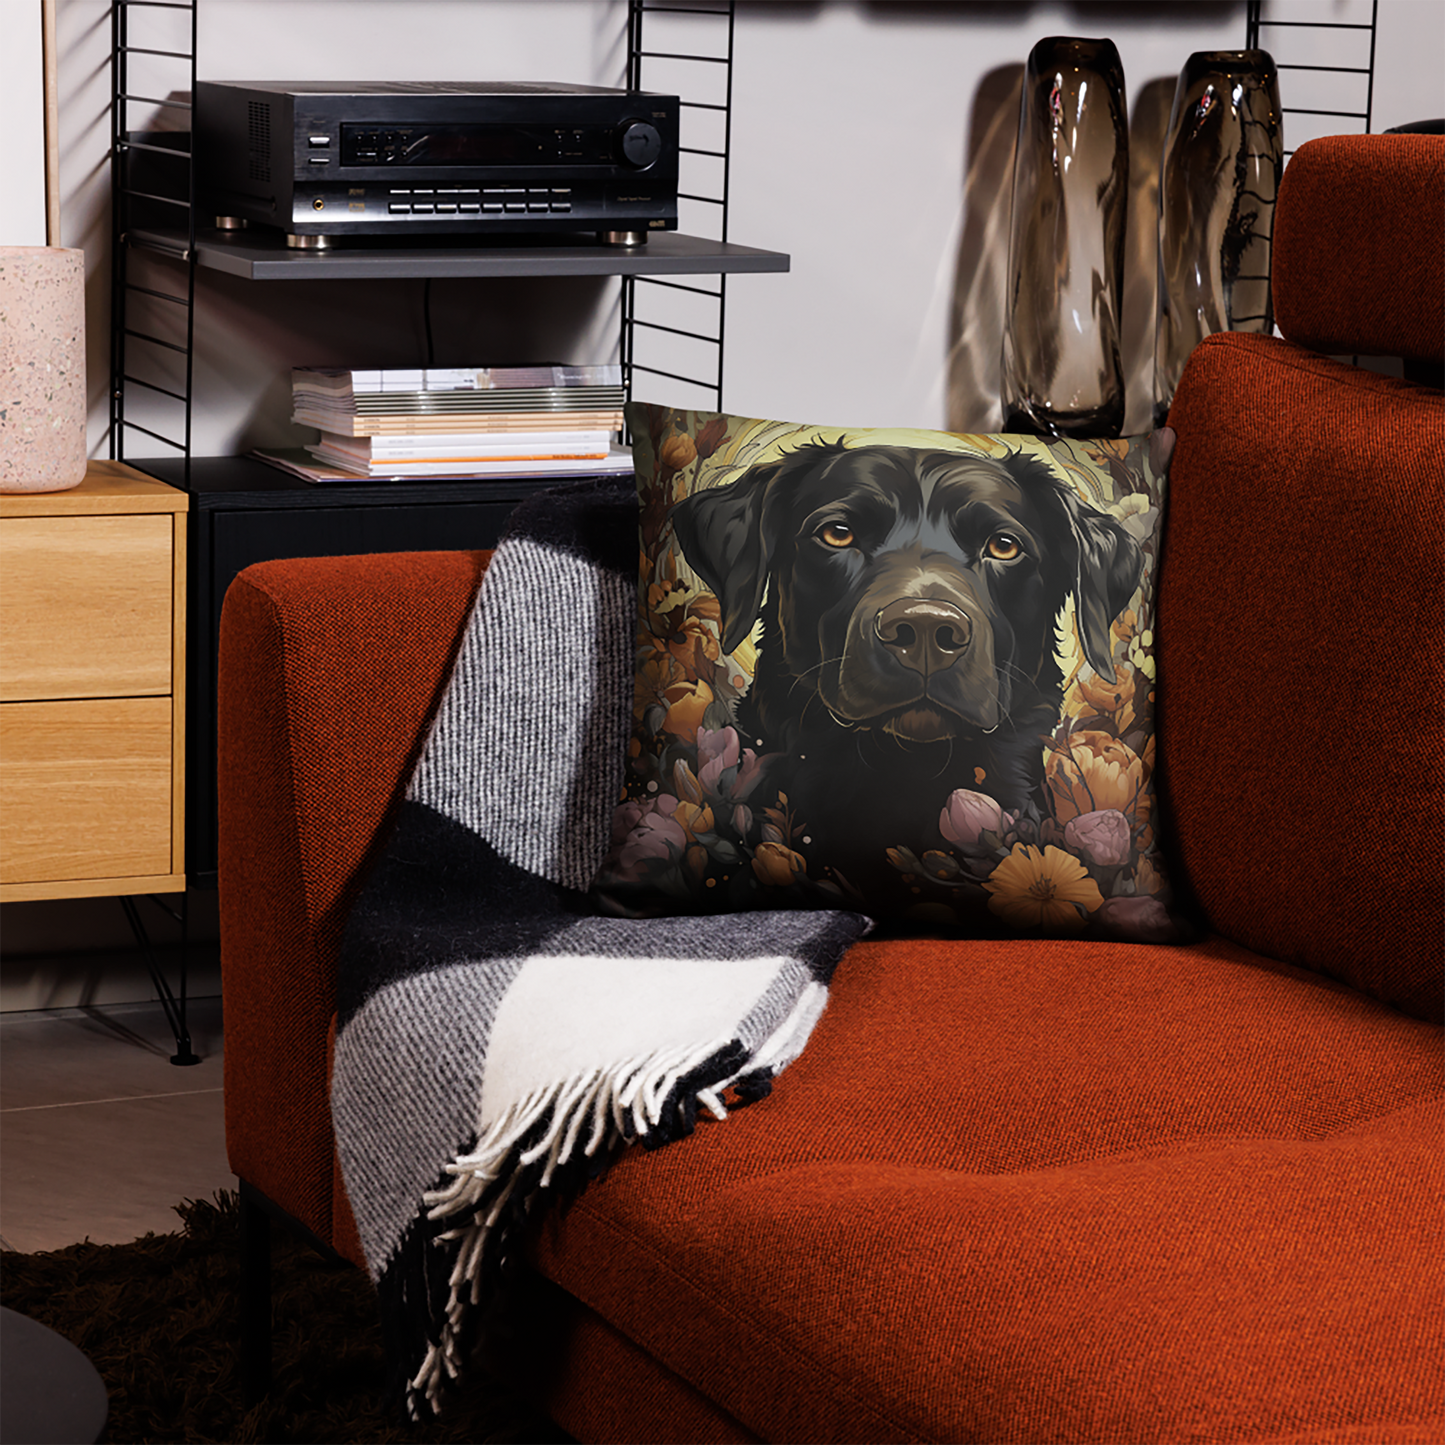 Dog Throw Pillow Fantasy Labrador Floral Embrace Polyester Decorative Cushion 18x18